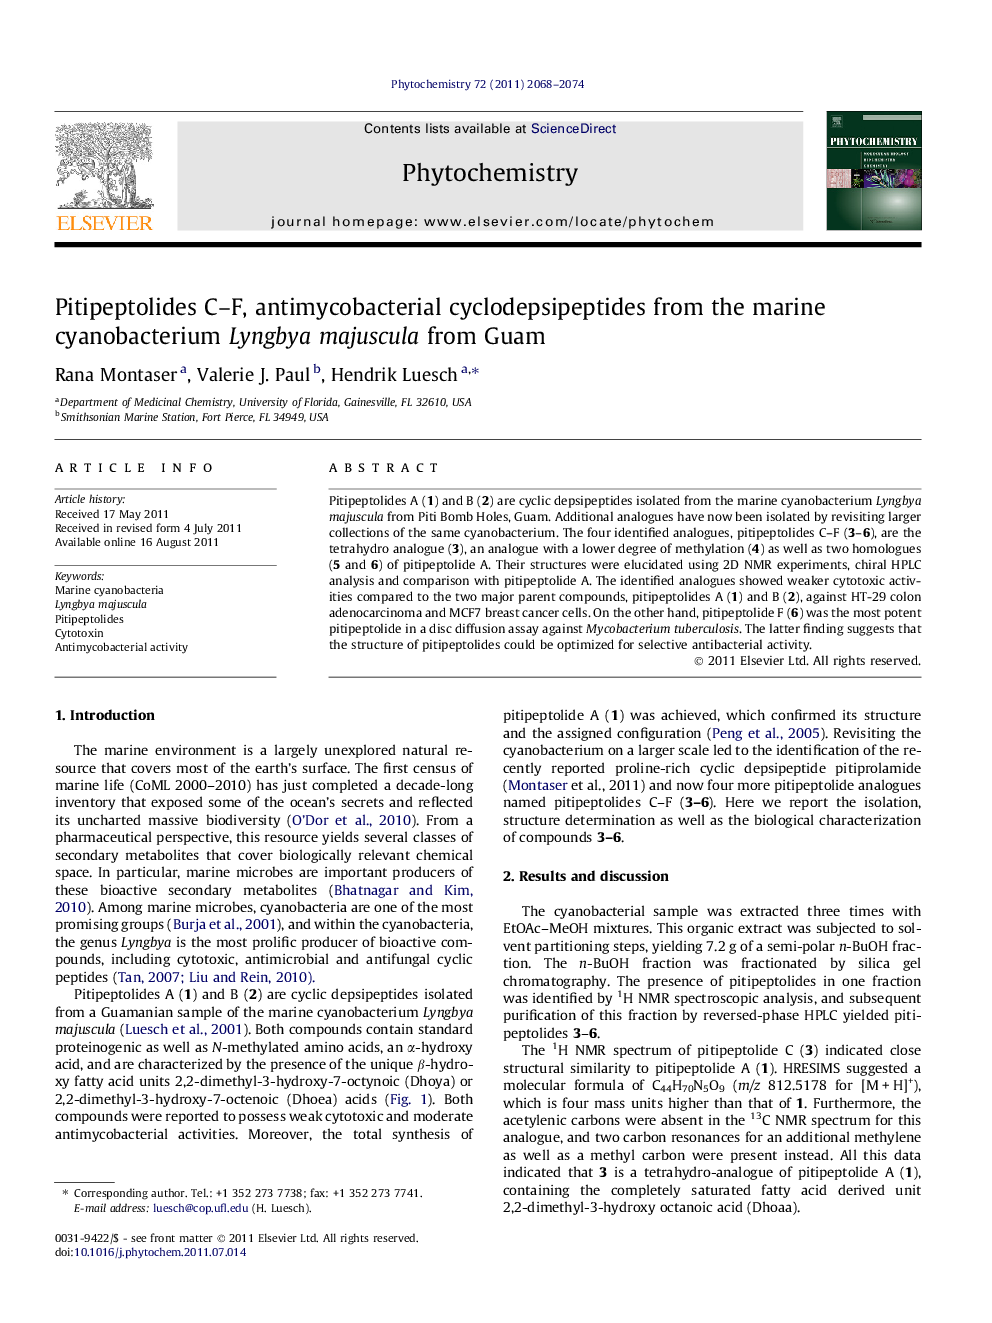 Pitipeptolides C-F, antimycobacterial cyclodepsipeptides from the marine cyanobacterium Lyngbya majuscula from Guam